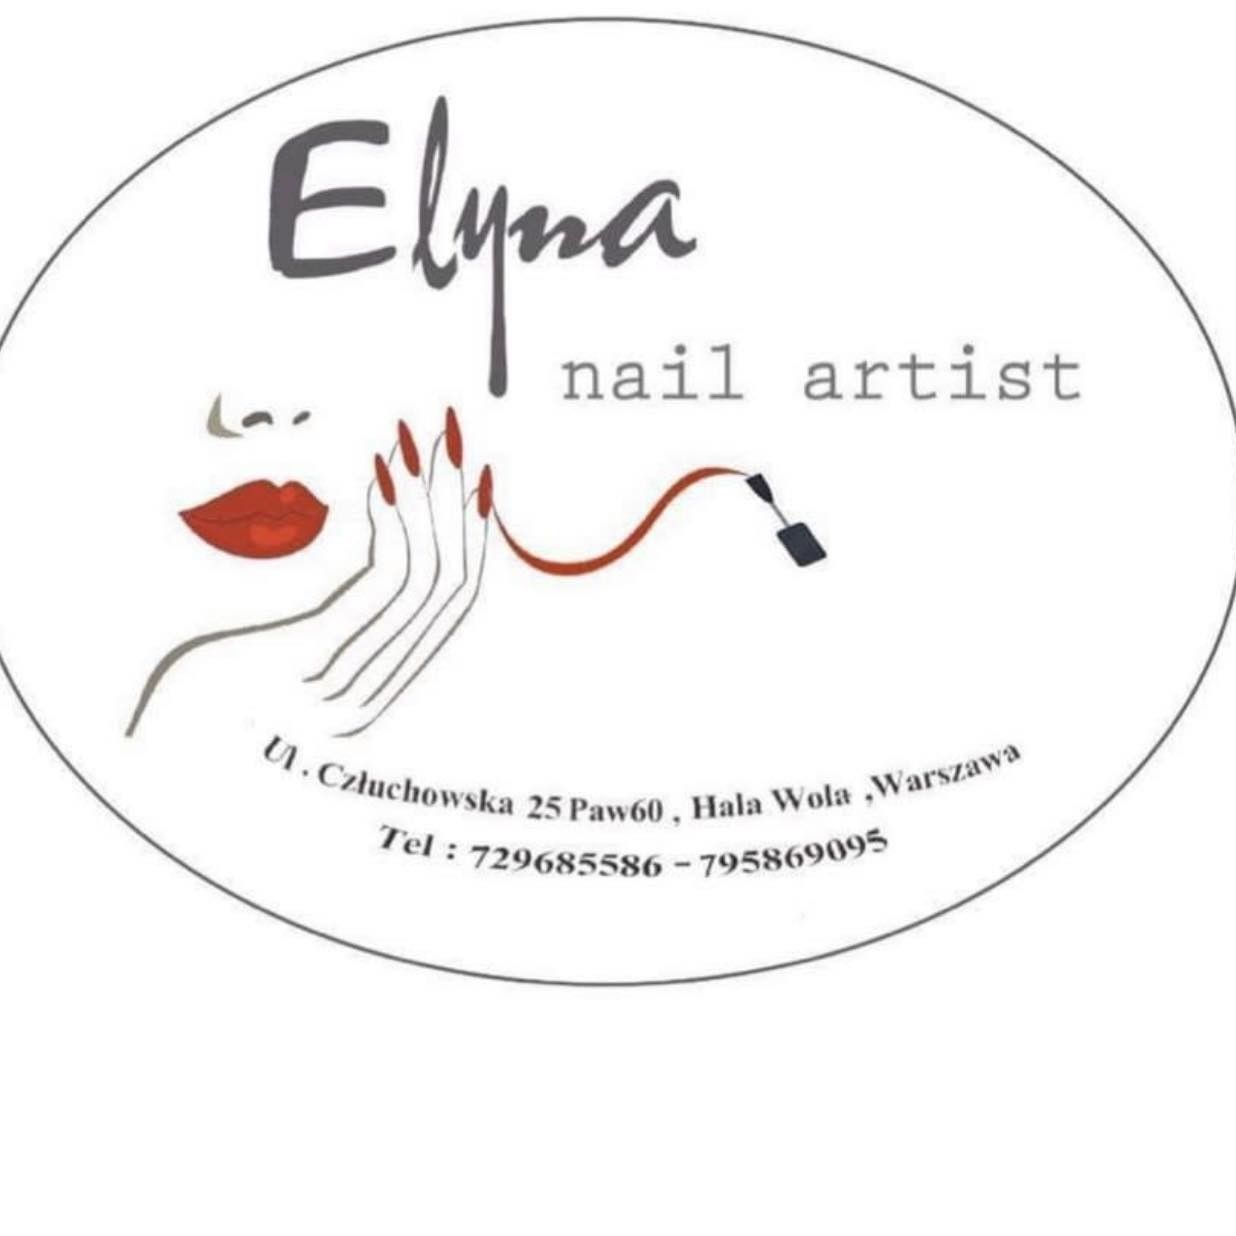 ELYNA NAILS - ElyNa NAILS